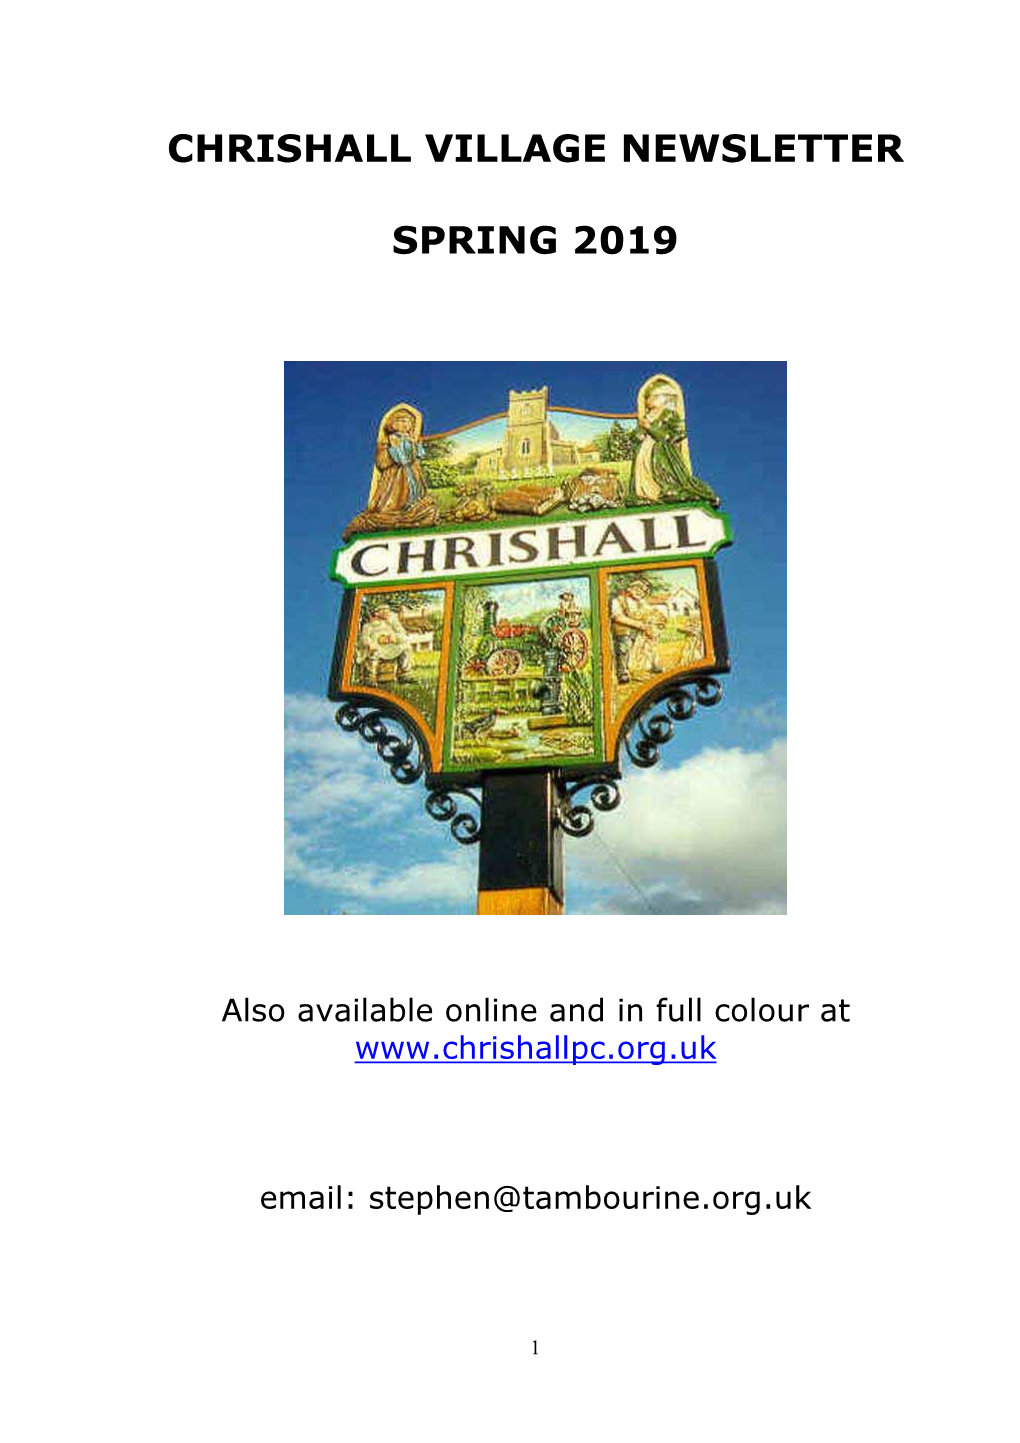 Chrishall Village Newsletter Spring 2019